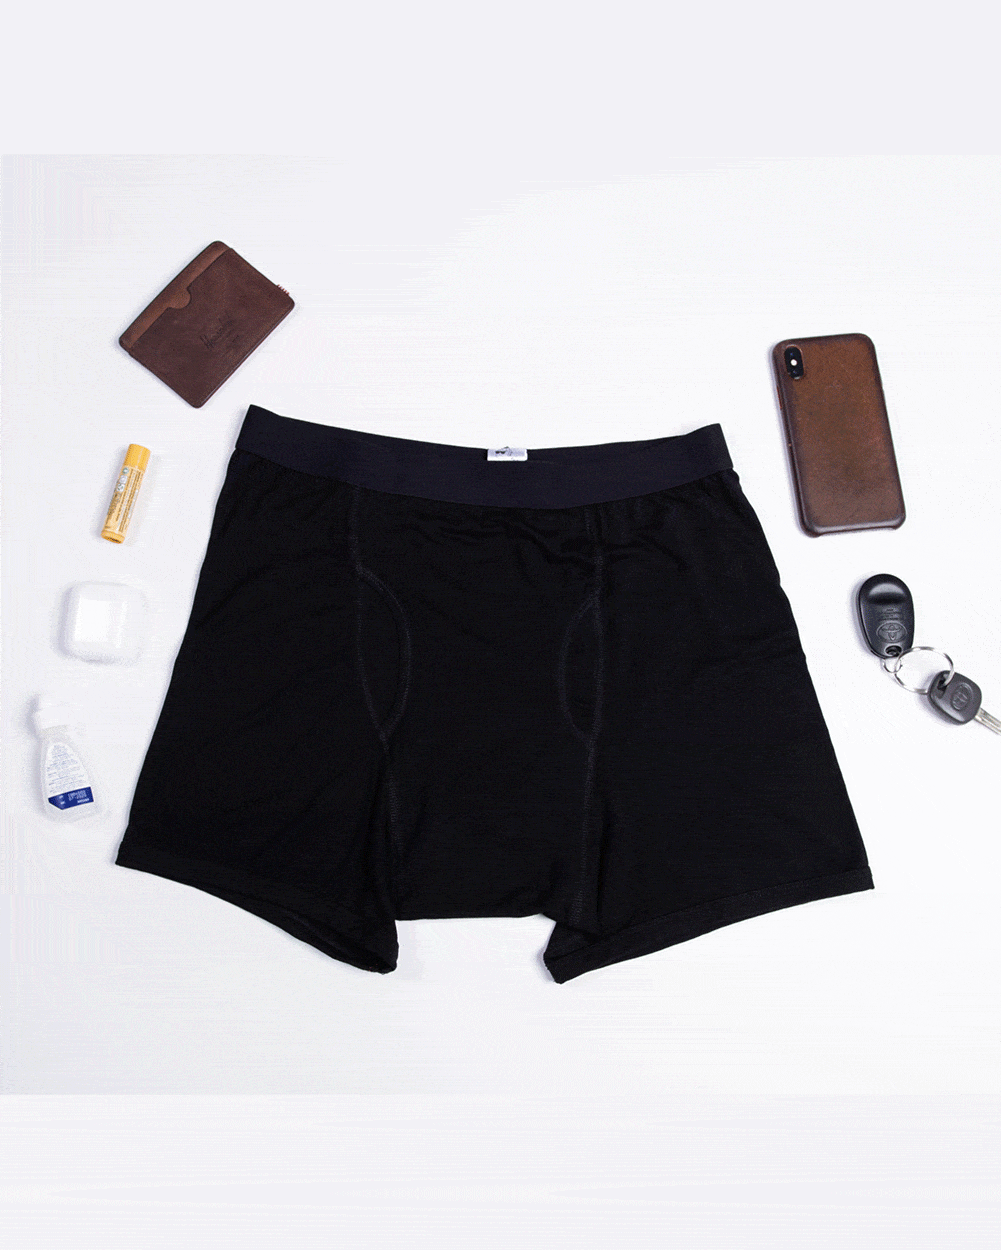 Pocket Underwear for Men with Secret Hidden Front Stash Pocket, Travel Boxer  Brief, XX-Large Size 2 Packs (Black), Black, XX-Large : :  Clothing, Shoes & Accessories